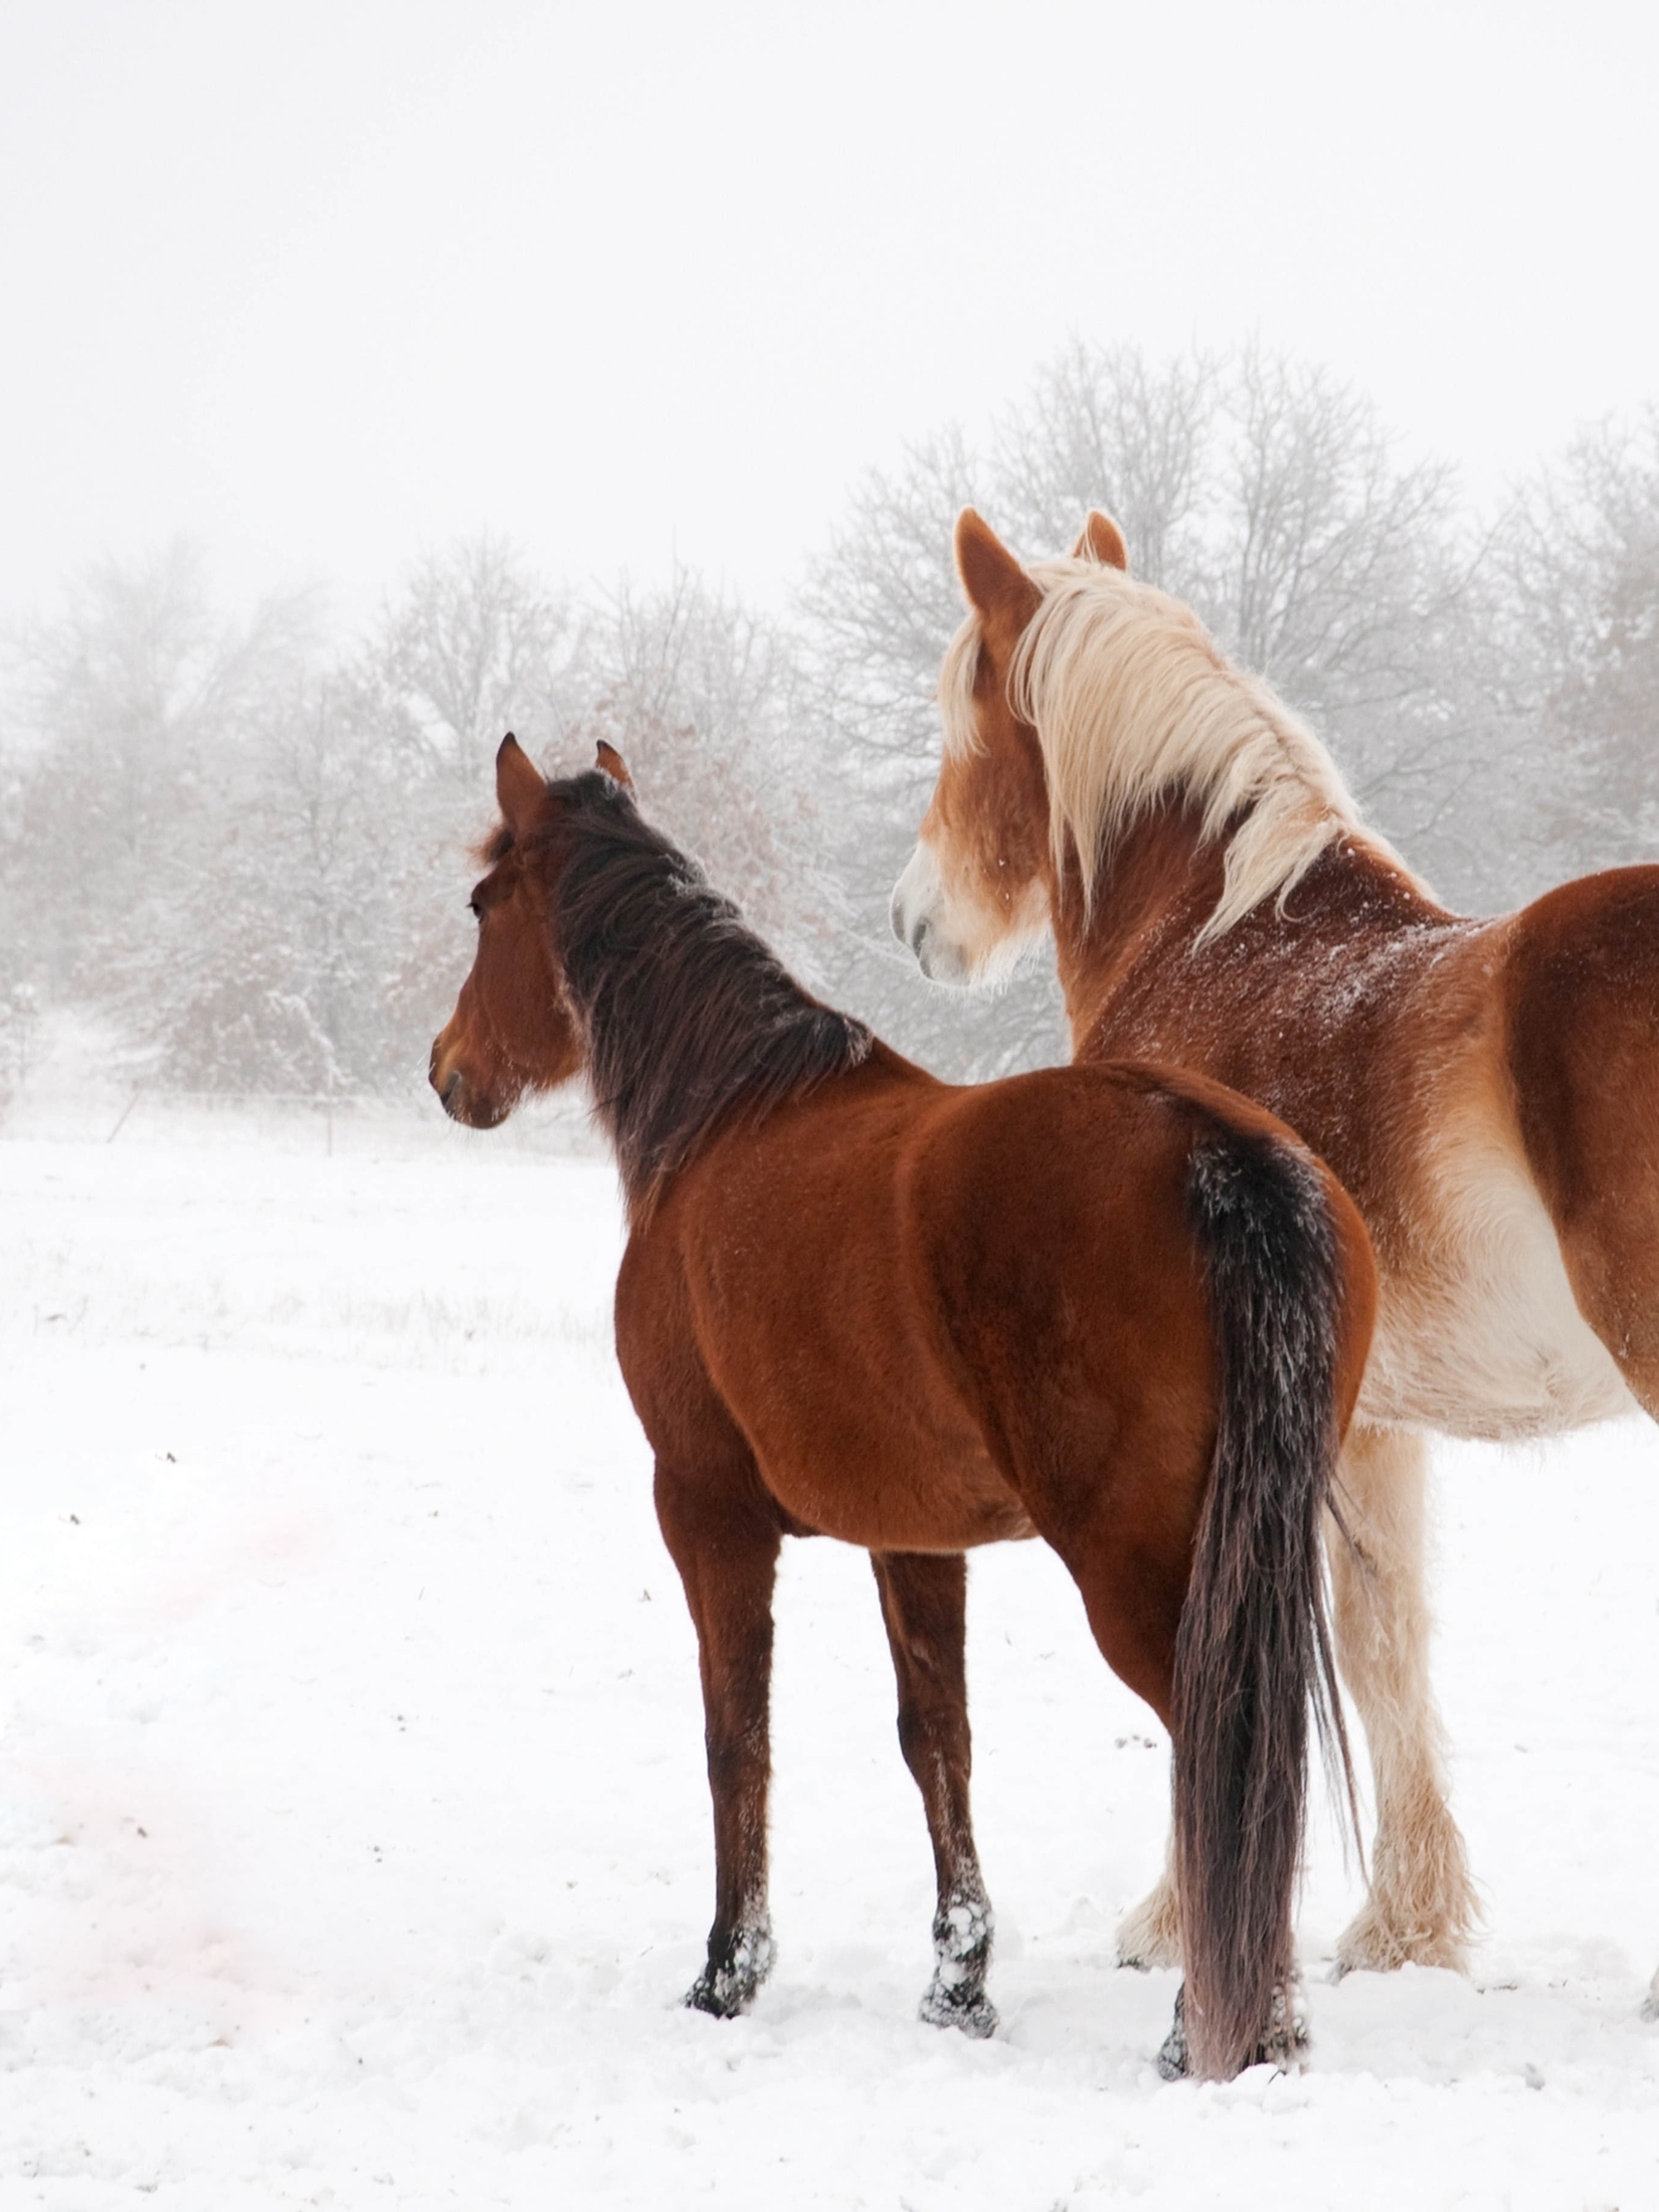 Image: Horse, winter, snow, couple